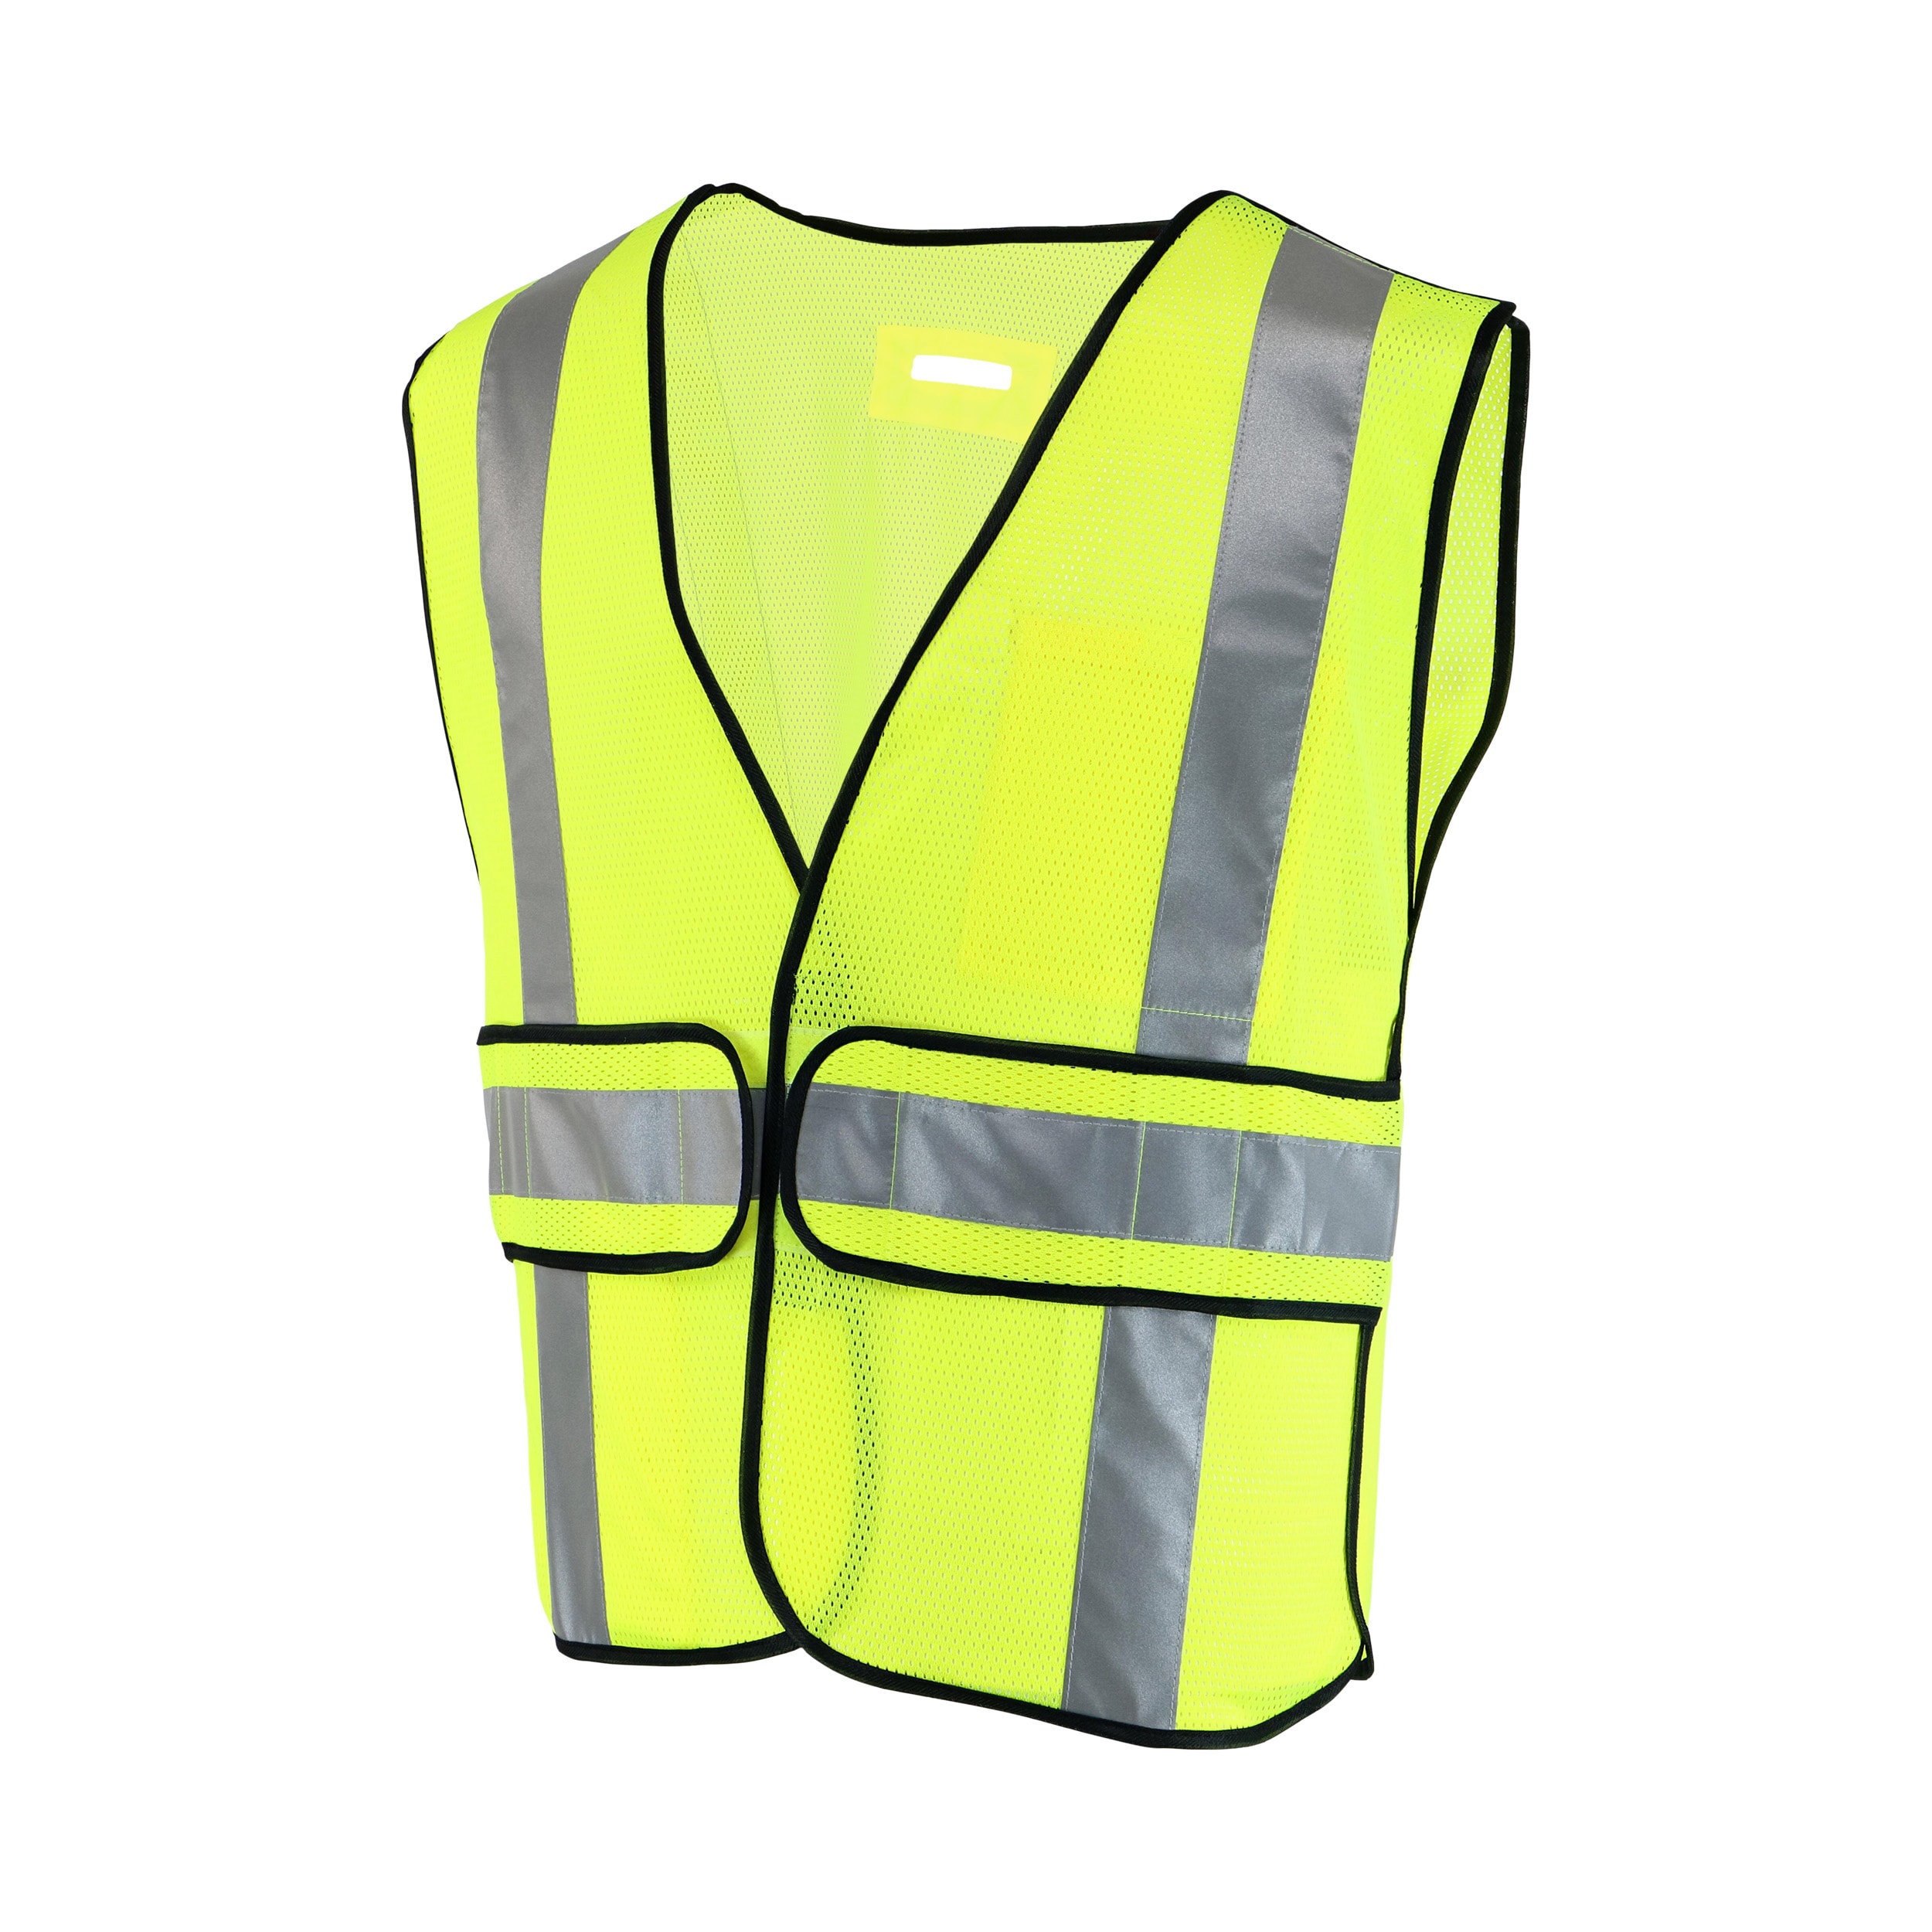 FX HIGH VISIBILITY Surveyor Two Tone Safety Vest Solid front  Mesh back   CÔNG TY TNHH DỊCH VỤ BẢO VỆ THĂNG LONG SECOM